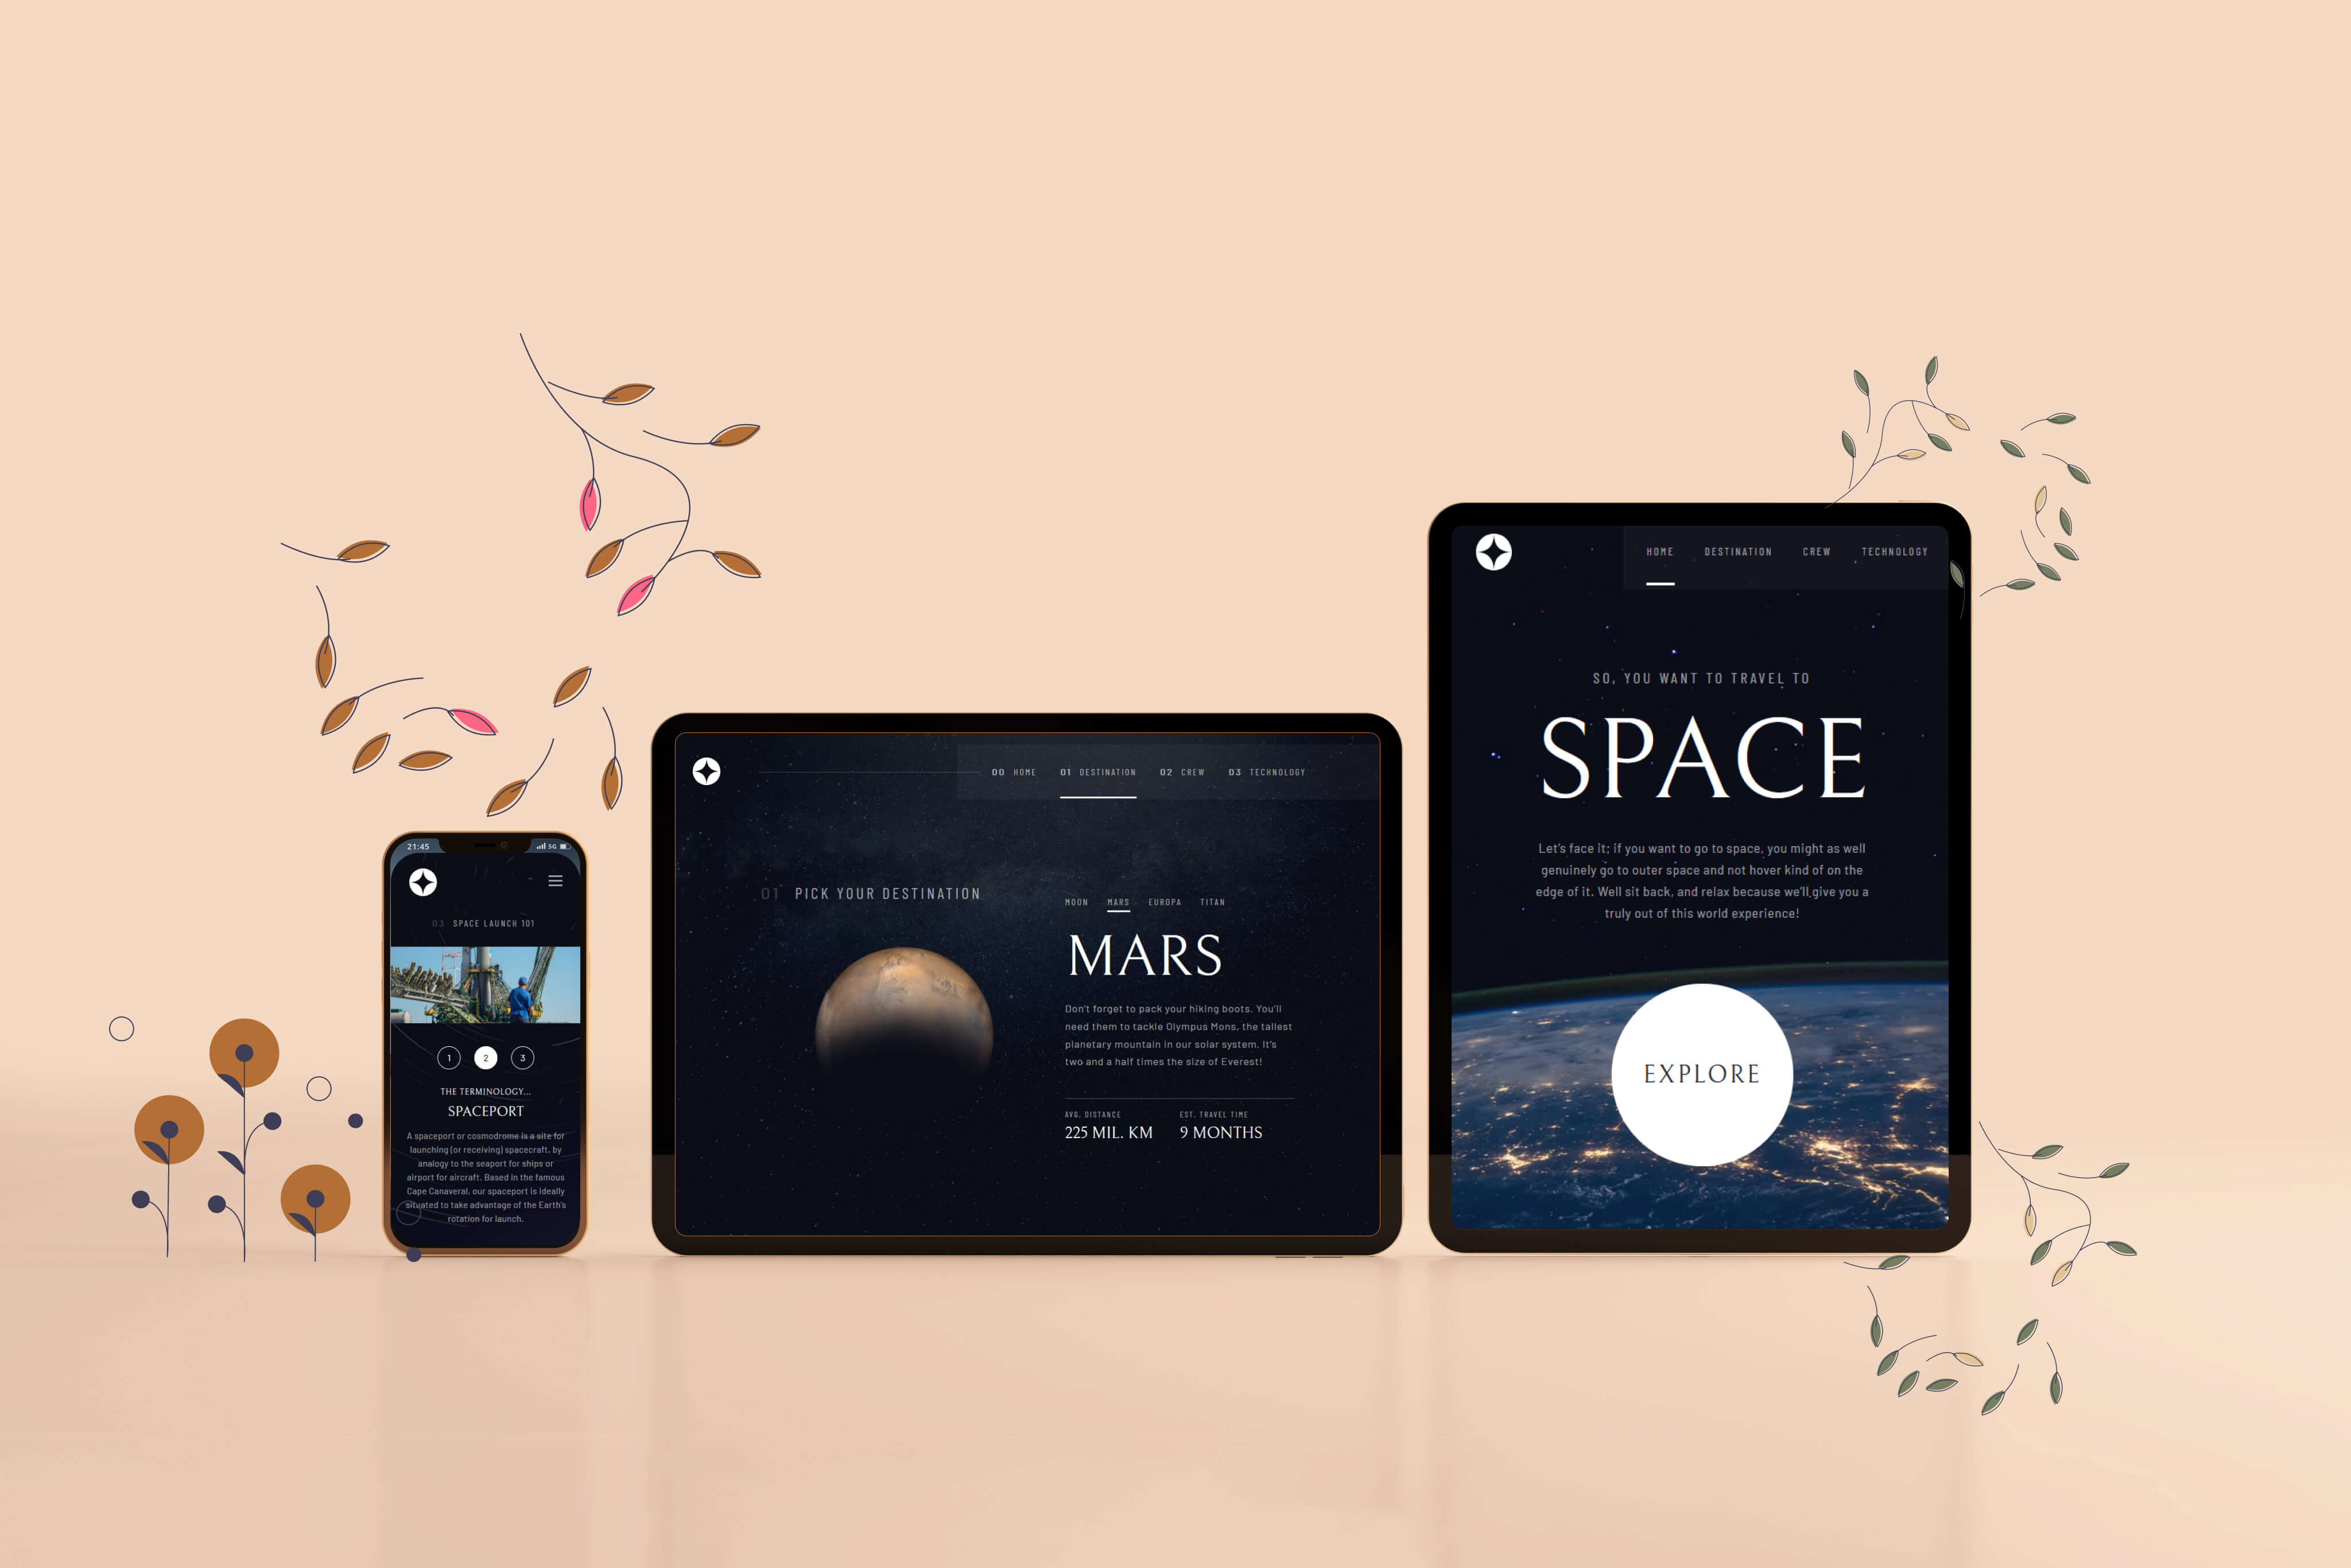 Space website - desktops device